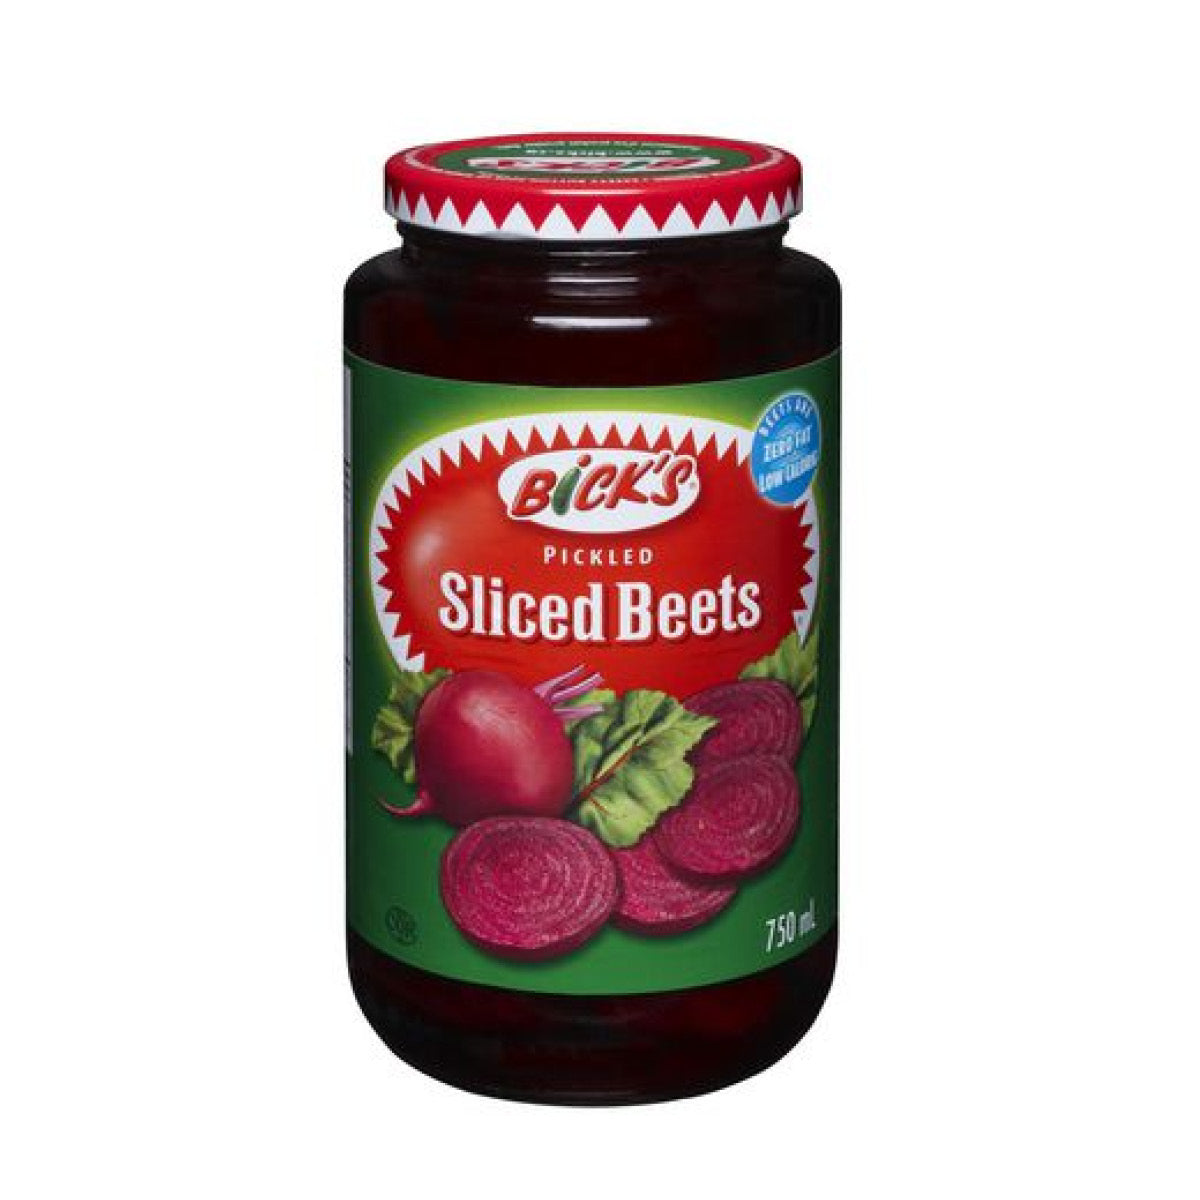 Bick's Pickled Sliced Beets, 750ml